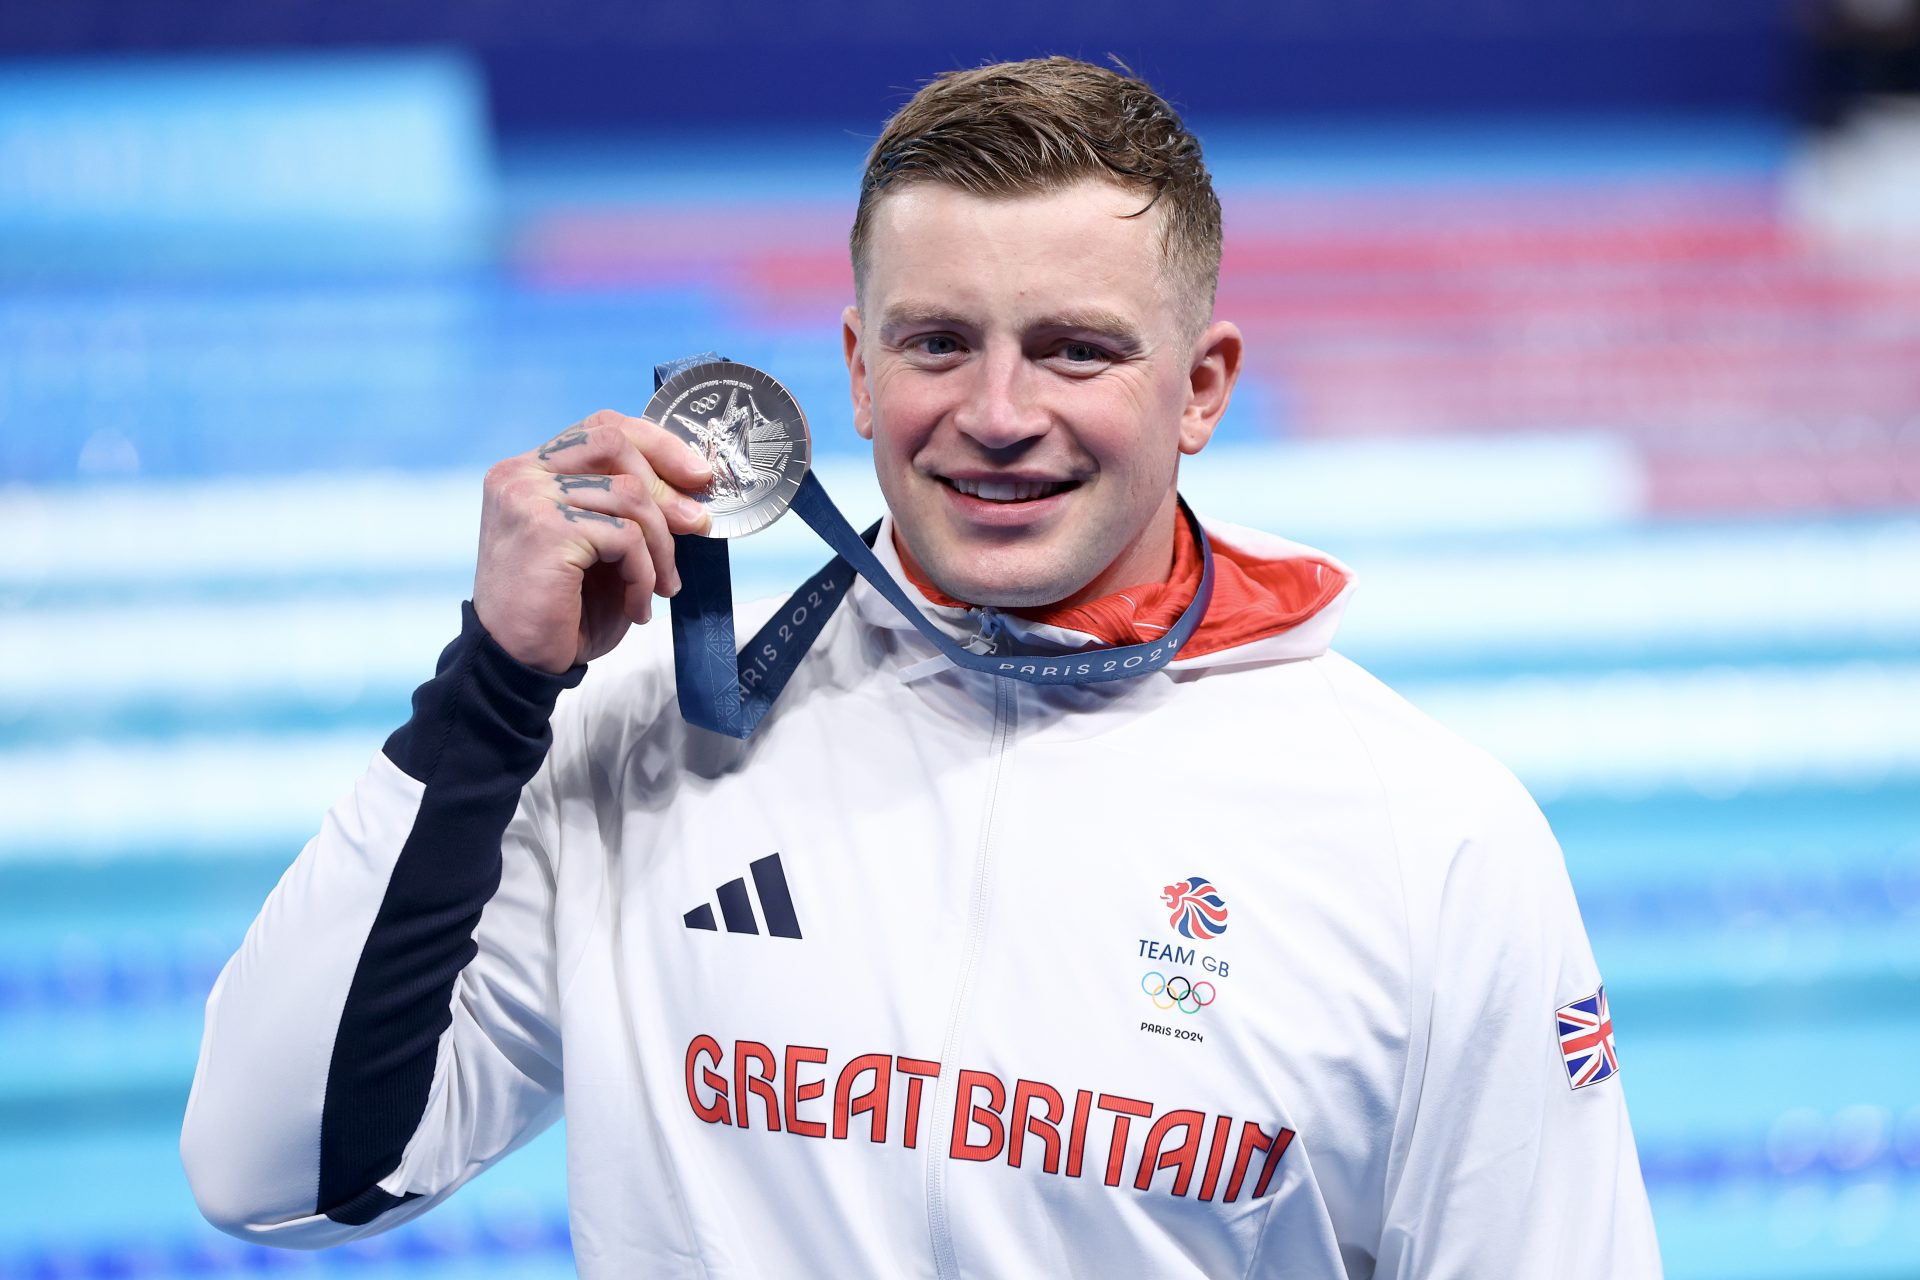 Follows British swimmer Adam Peaty